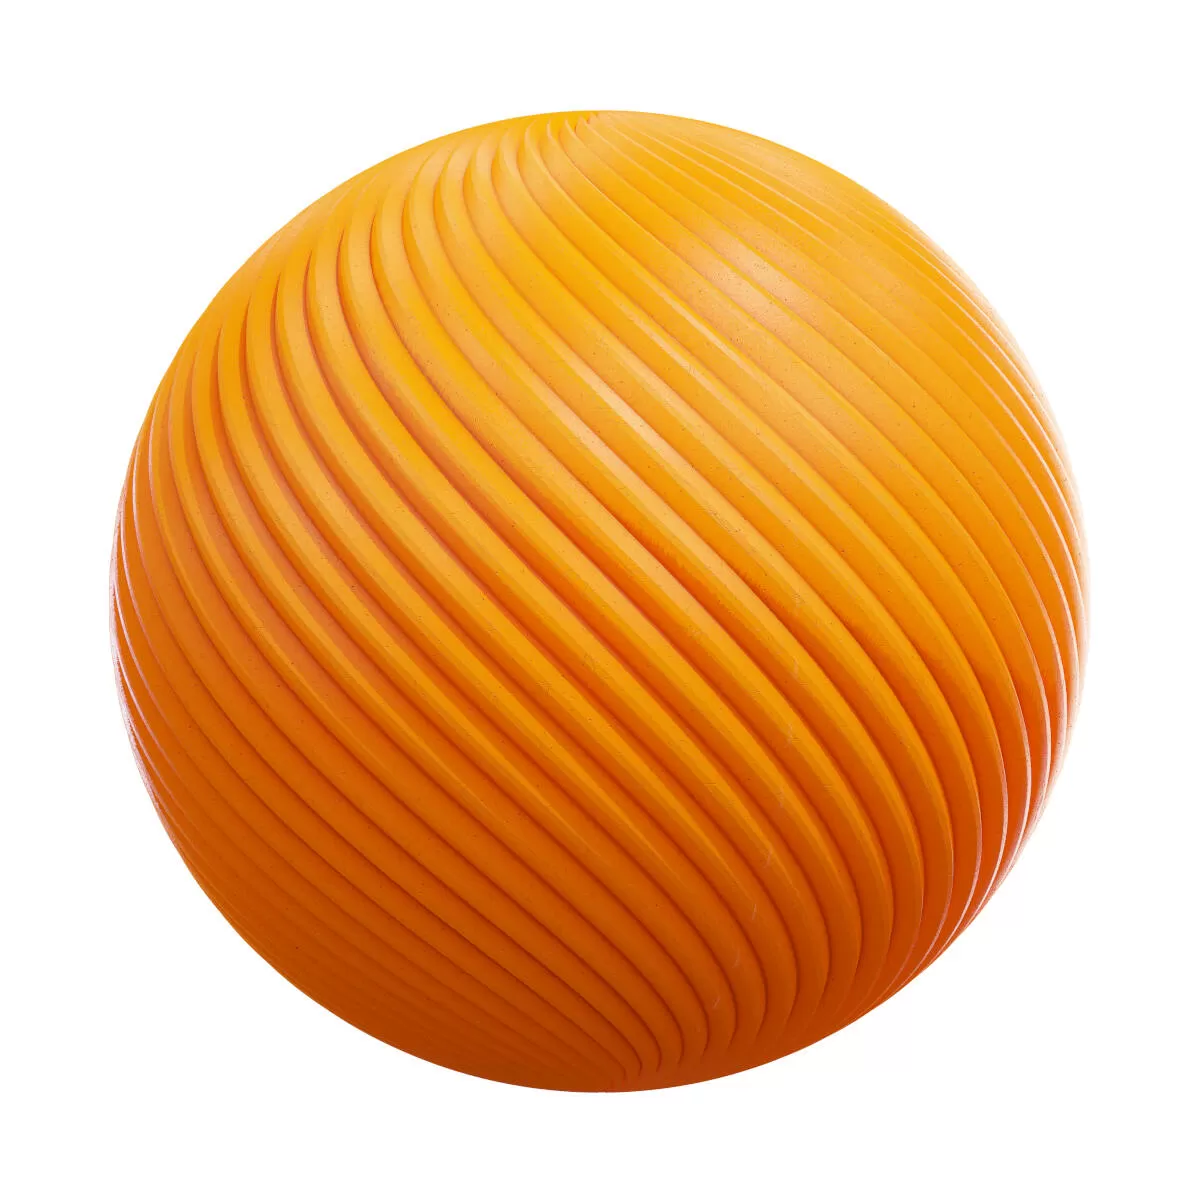 PBR Textures Volume 44 – Plastic – 4K – 8K – skewed_patterned_orange_plastic_41_38